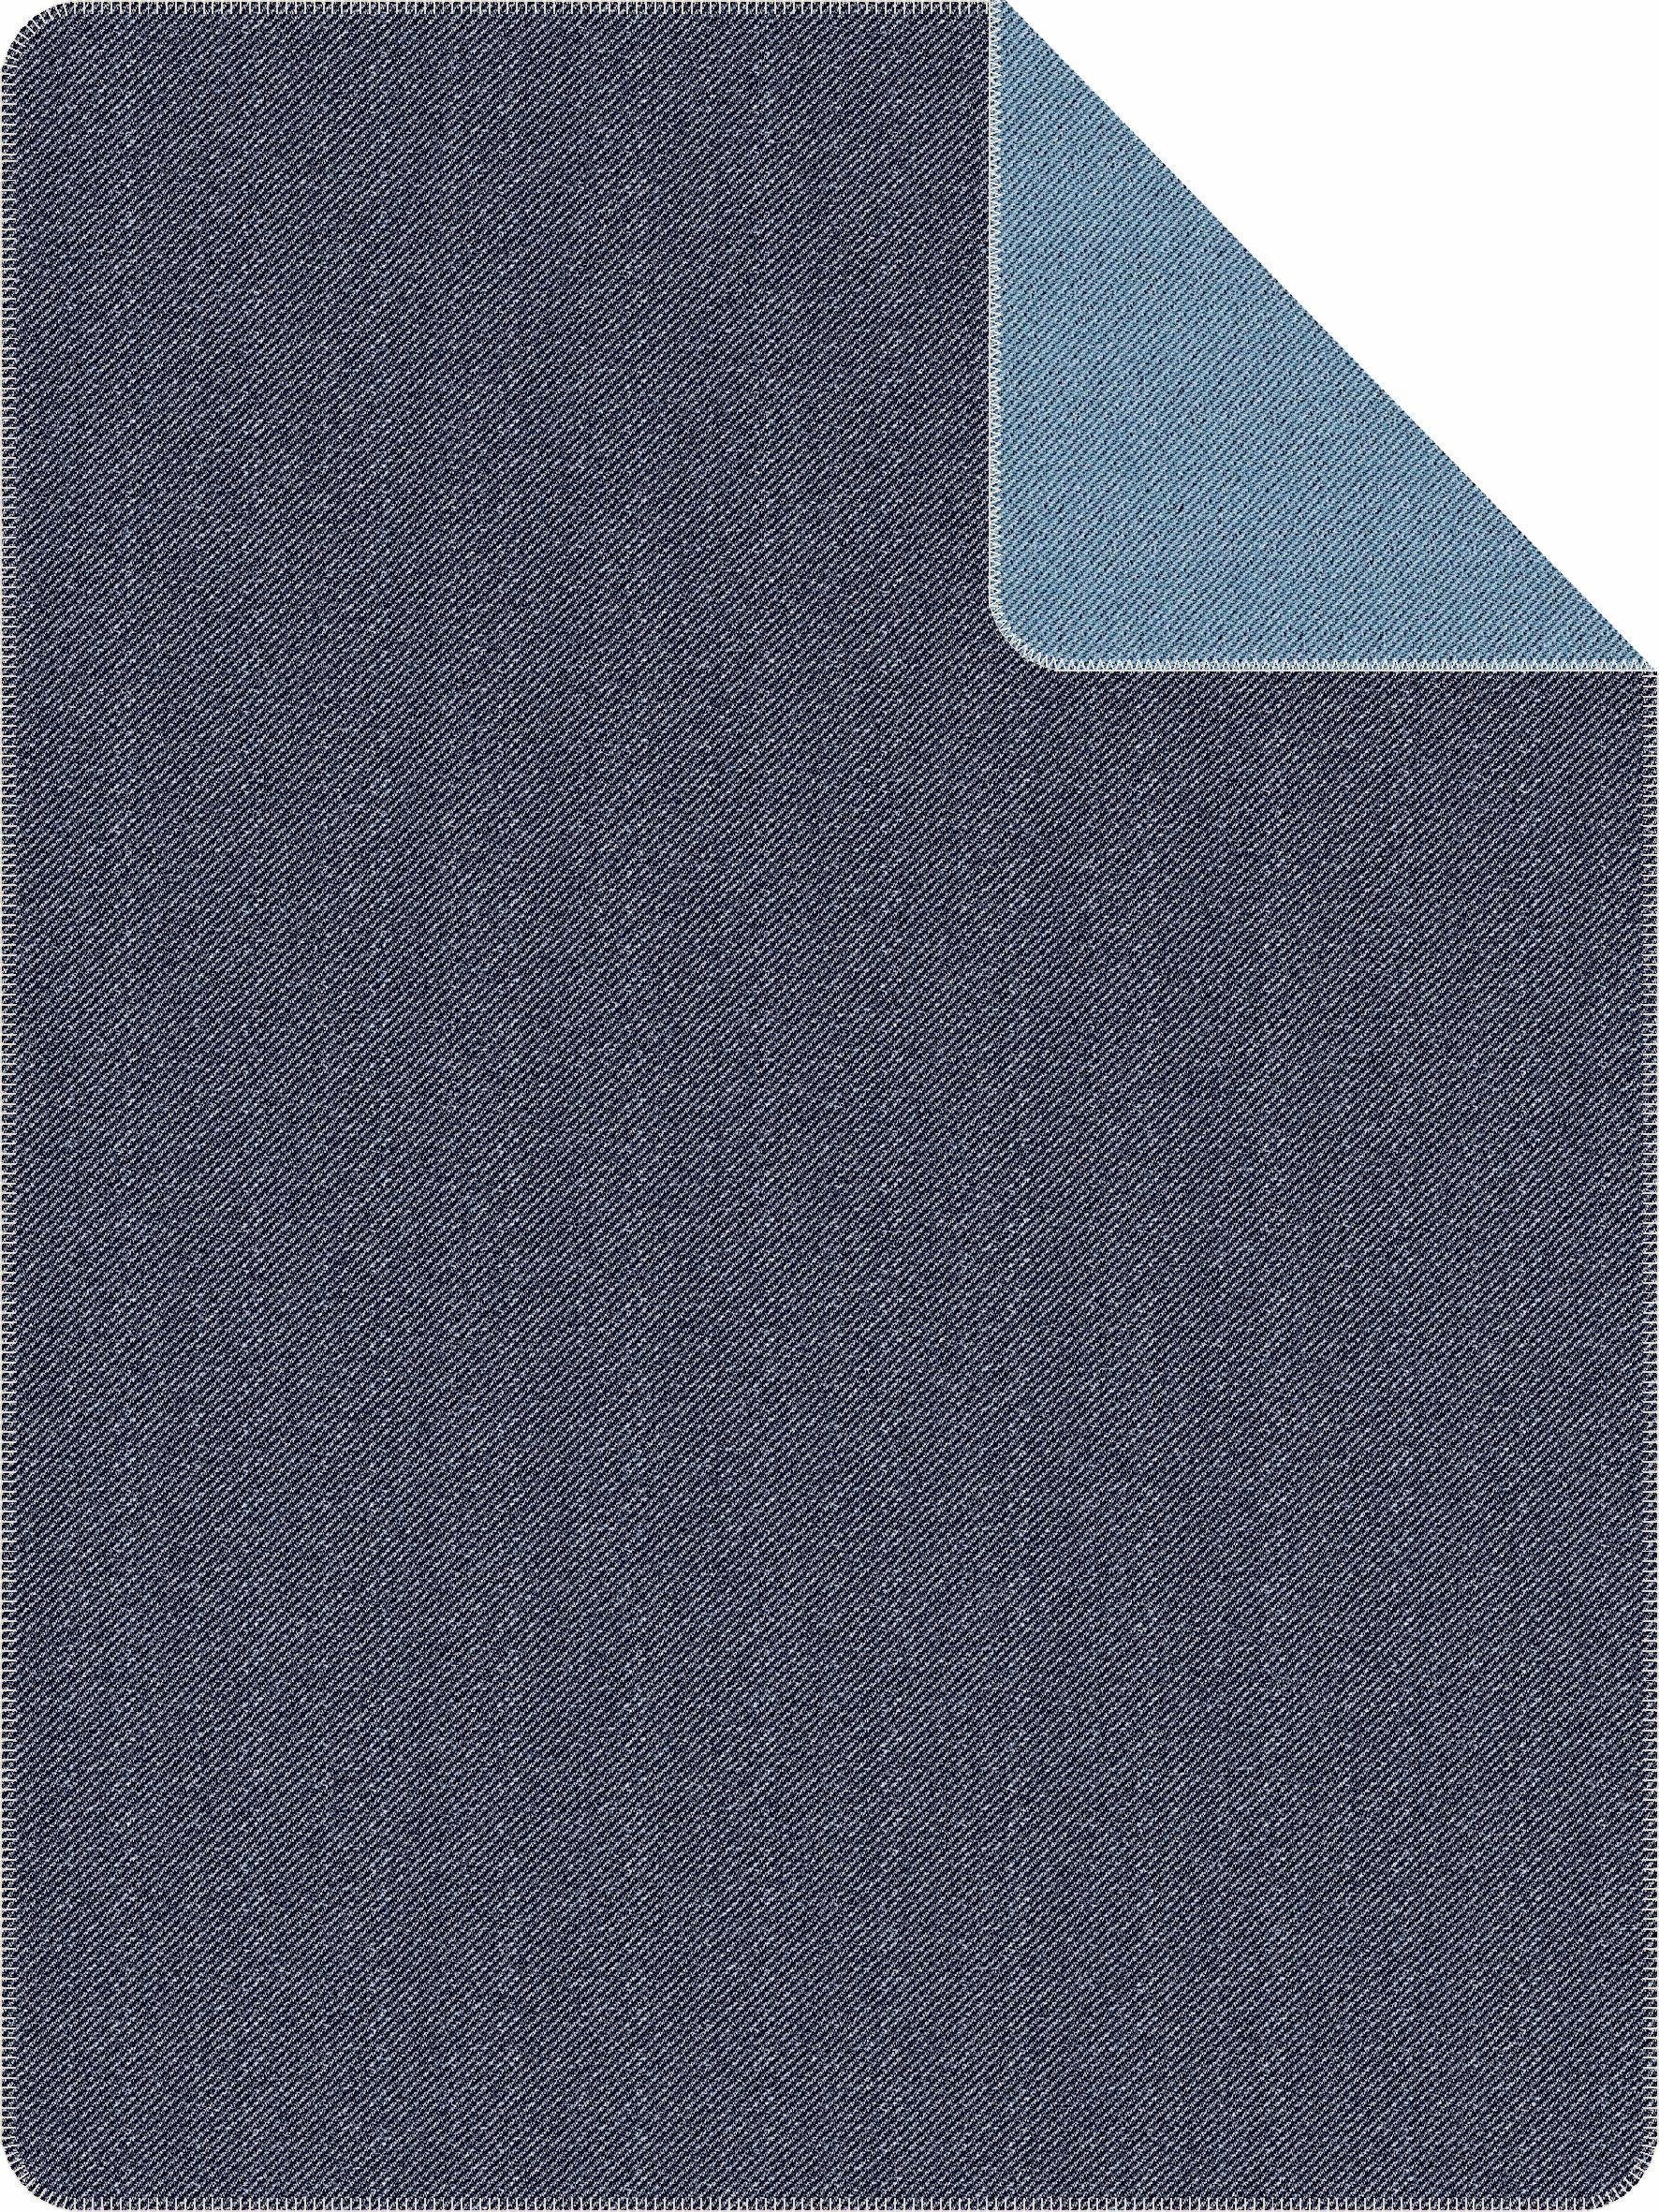 Wohndecke Haag, s.Oliver, in Doubleface Optik, Kuscheldecke blau